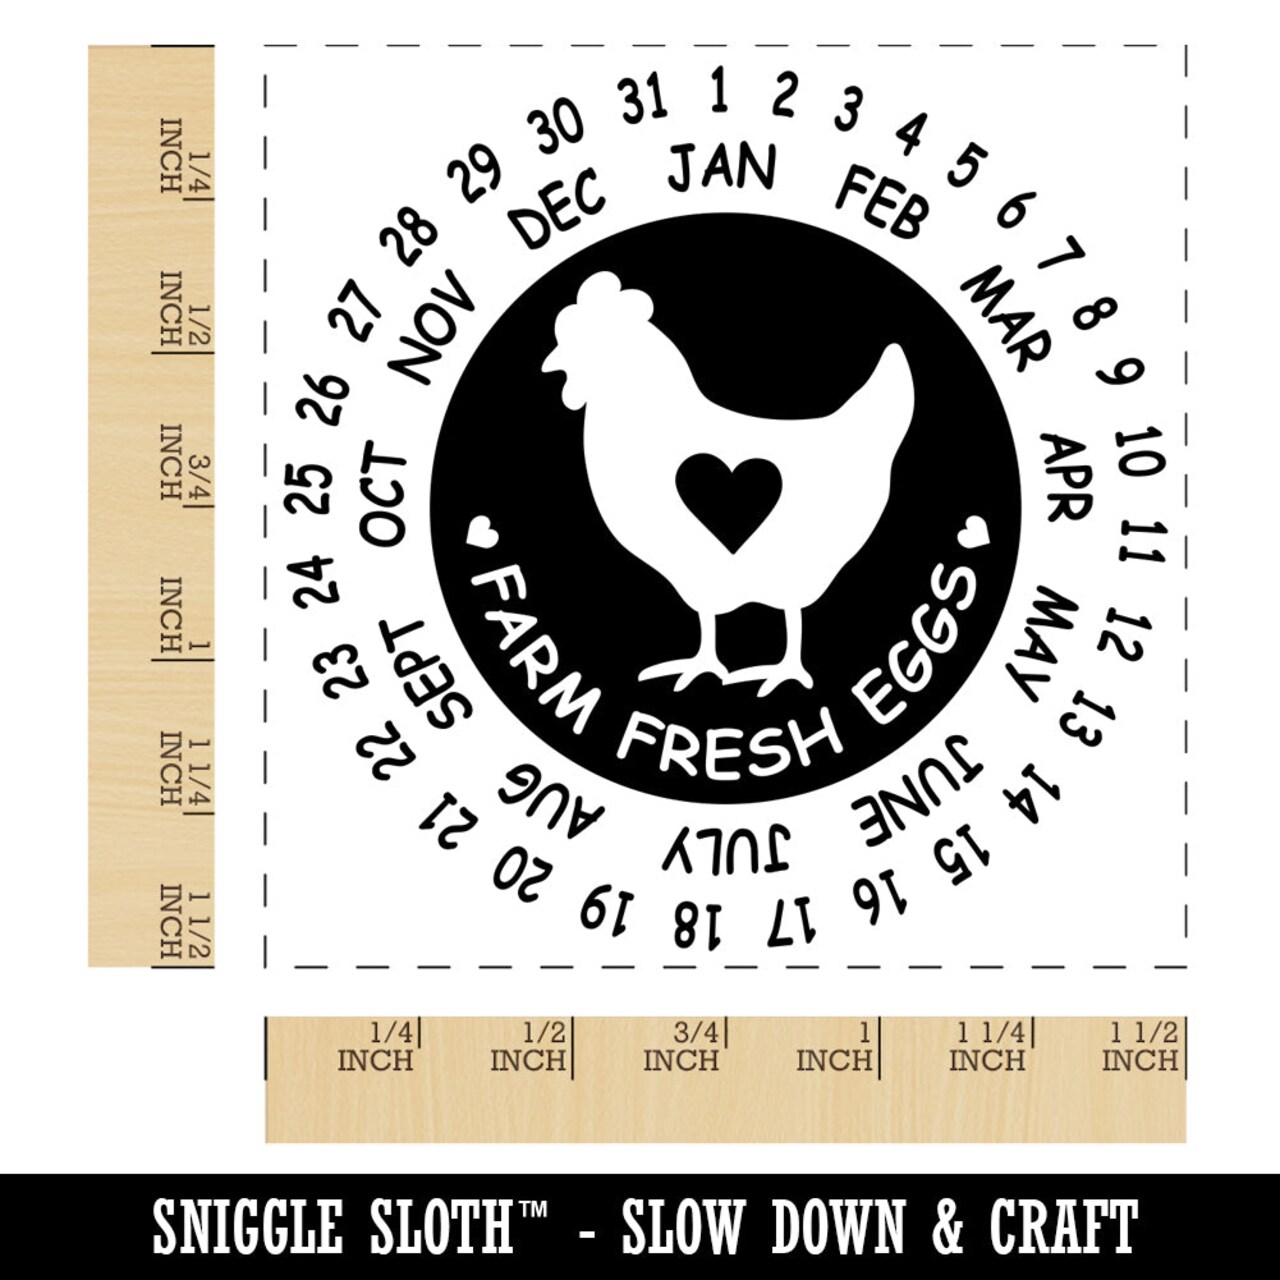 Egg Laid Expiration Date Calendar Self-Inking Rubber Stamp Ink Stamper